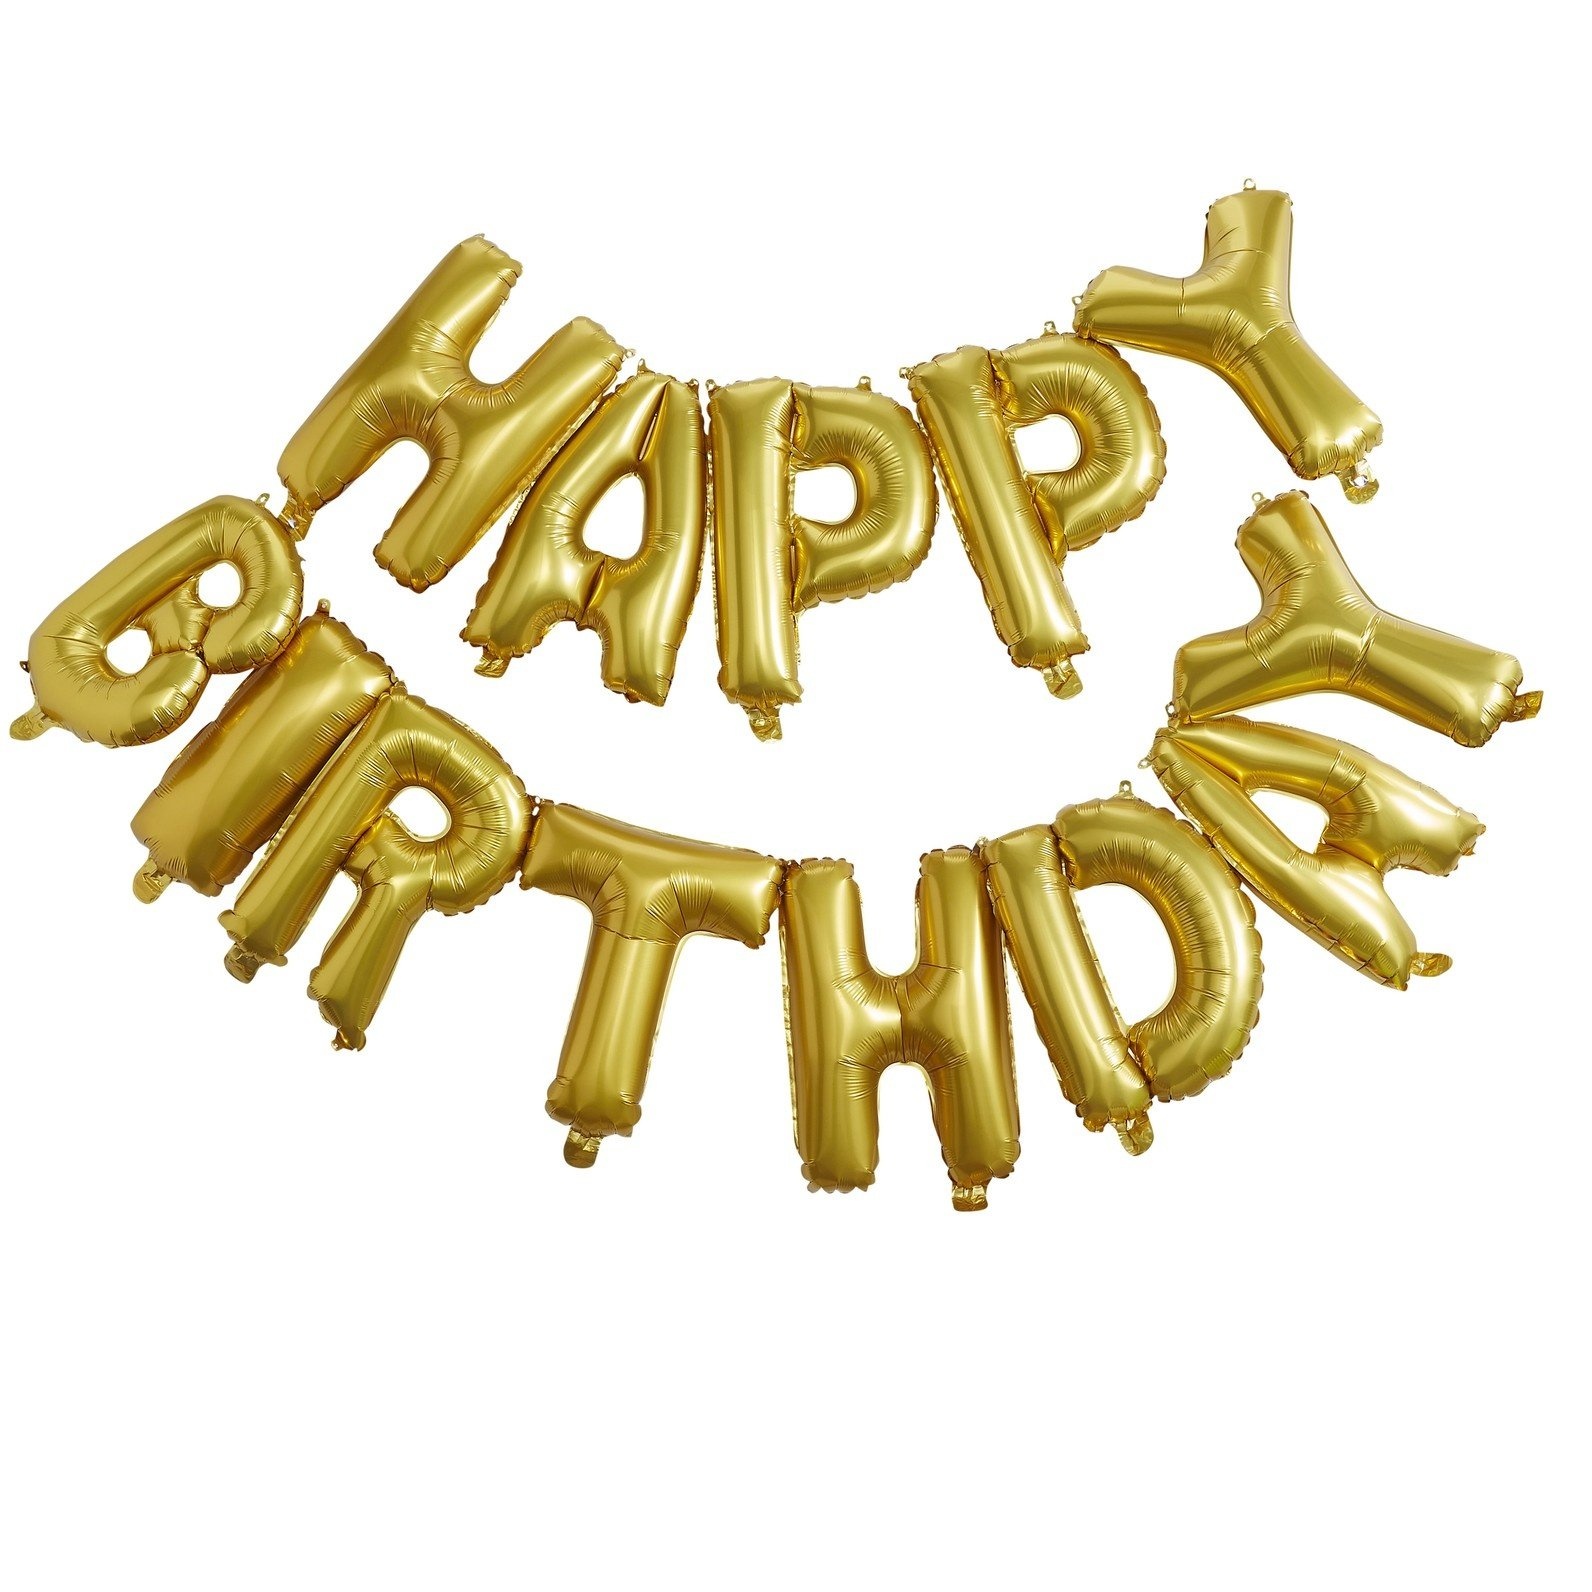 Ginger Ray® Ghirlanda Palloncini con coriandoli Happy Birthday